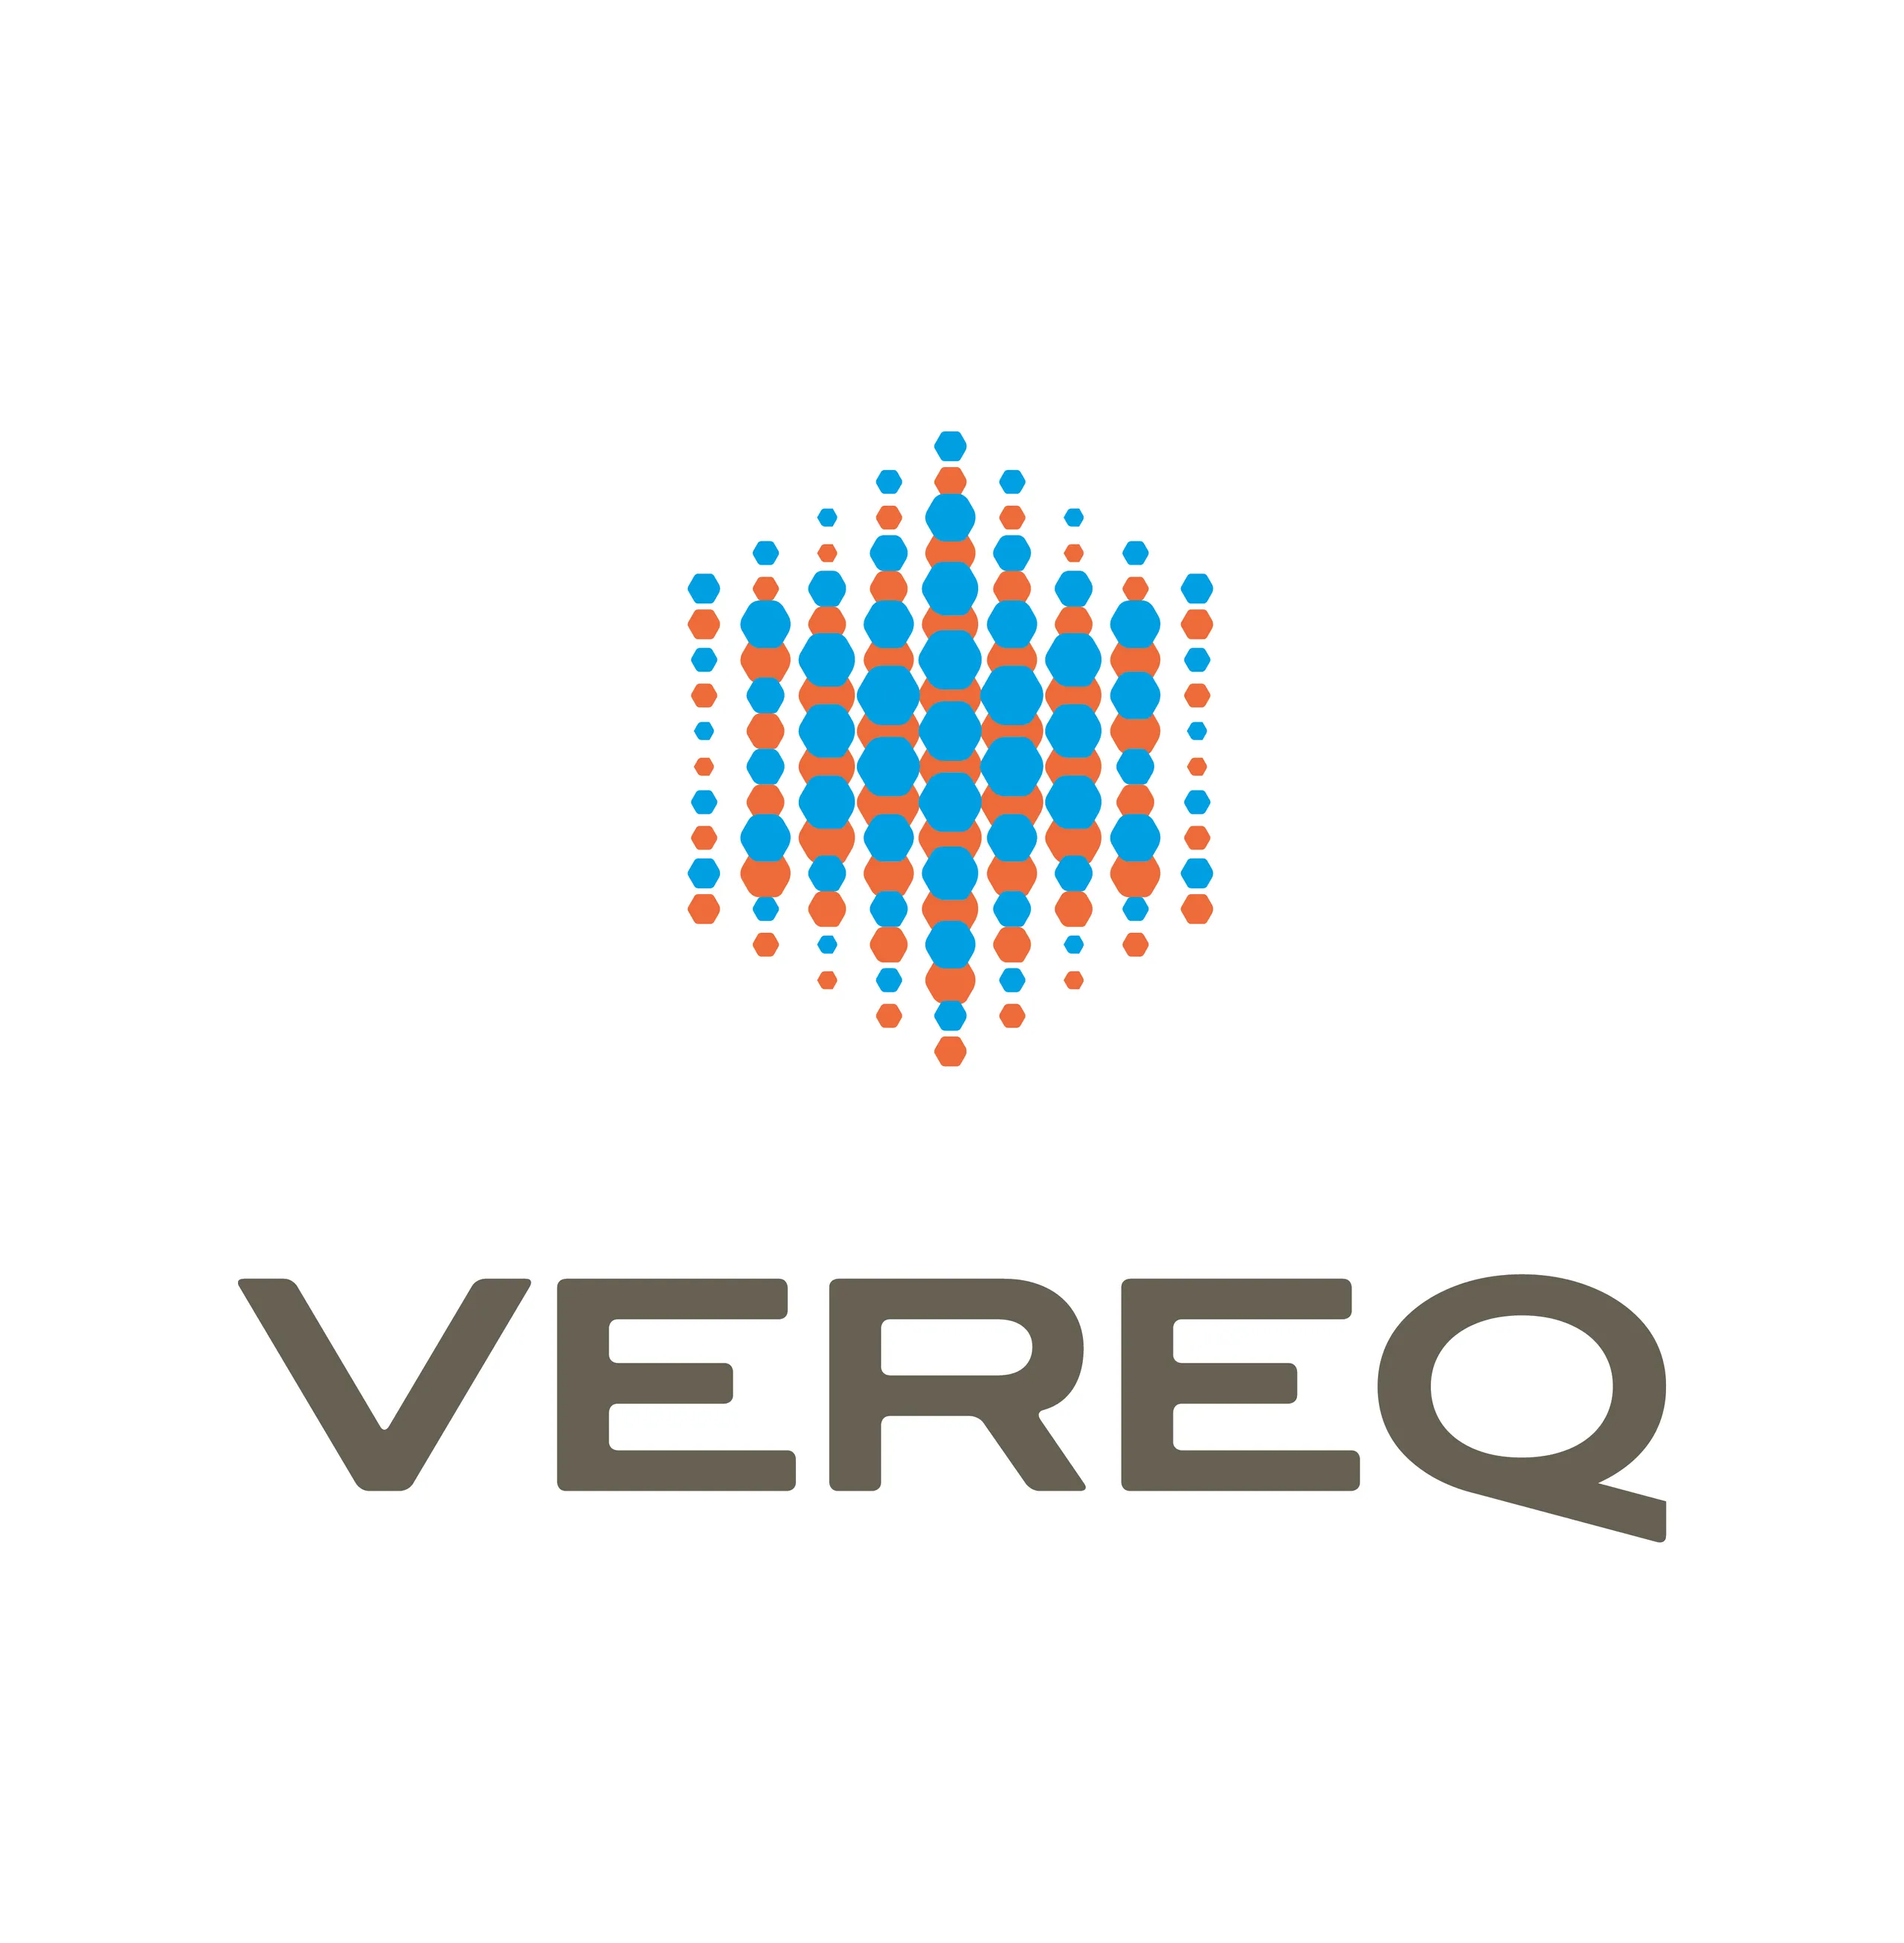 Verq vertical logo lockup in orange and cyan with a dark grey wordmark on a white field